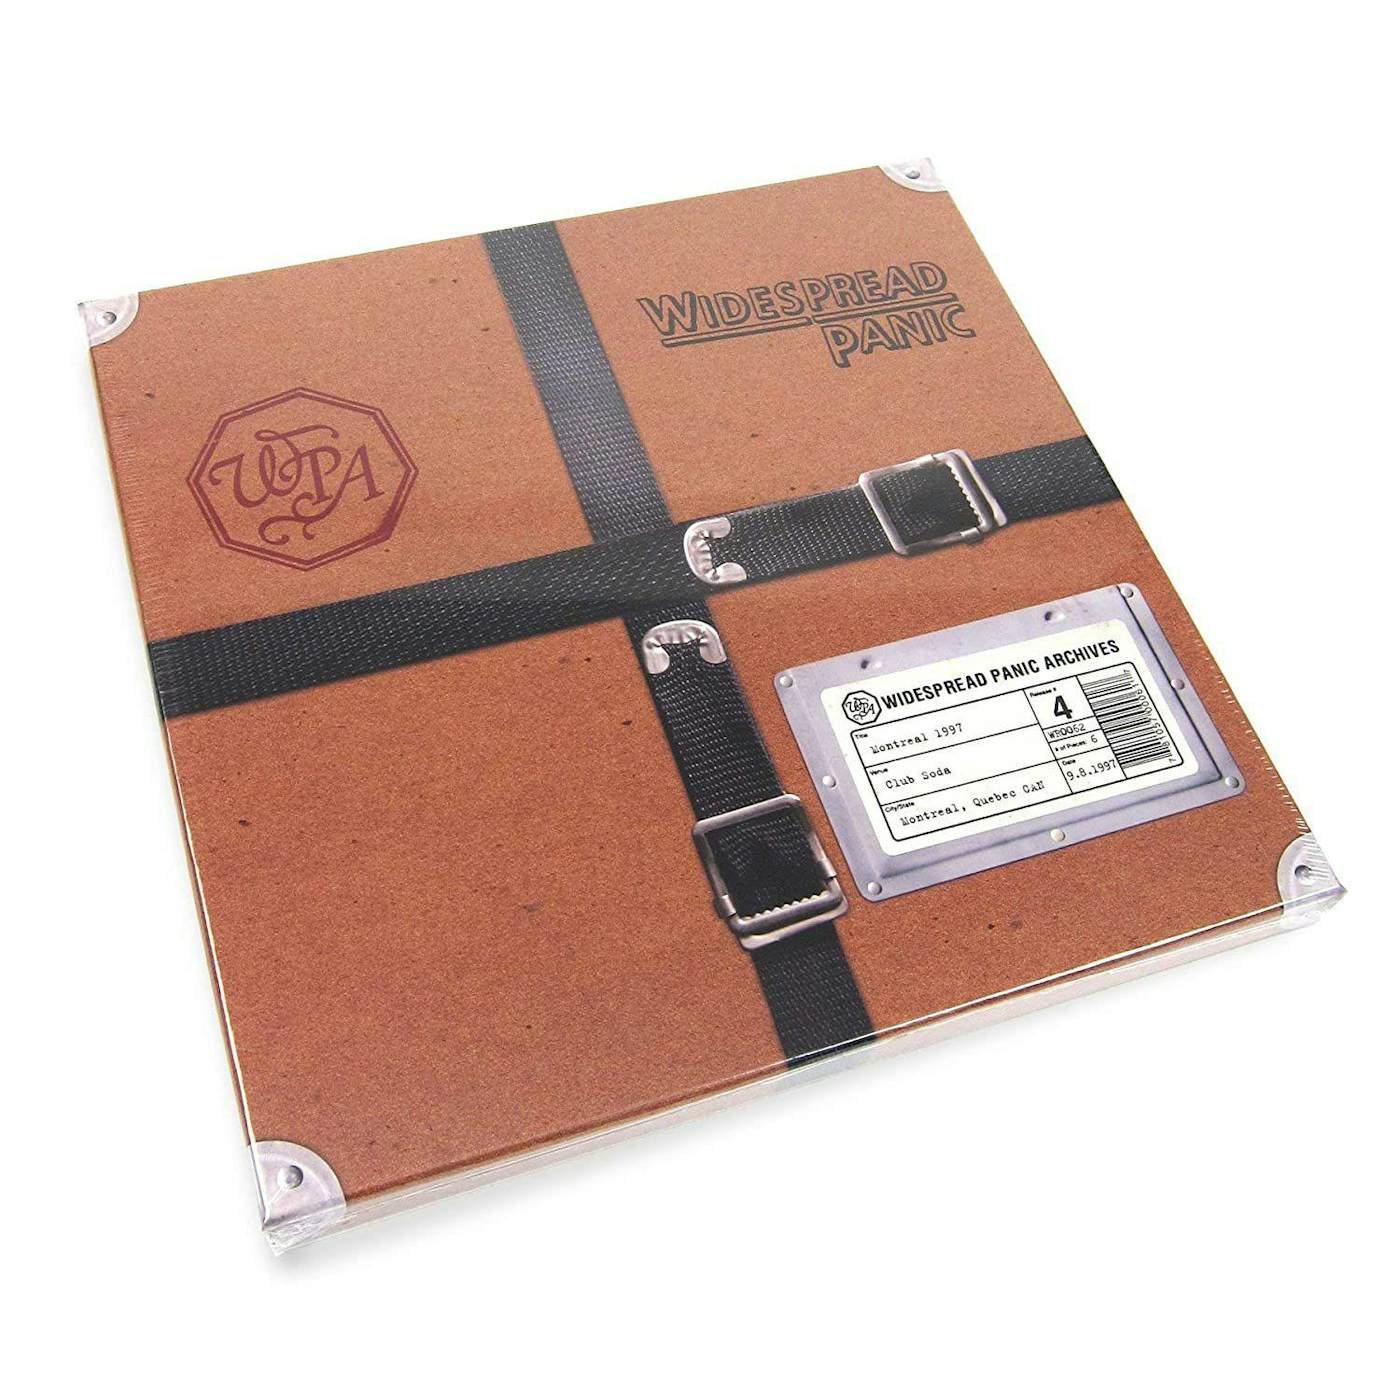 Widespread Panic MONTREAL 97 (6 DISC BOX SET) (Vinyl)